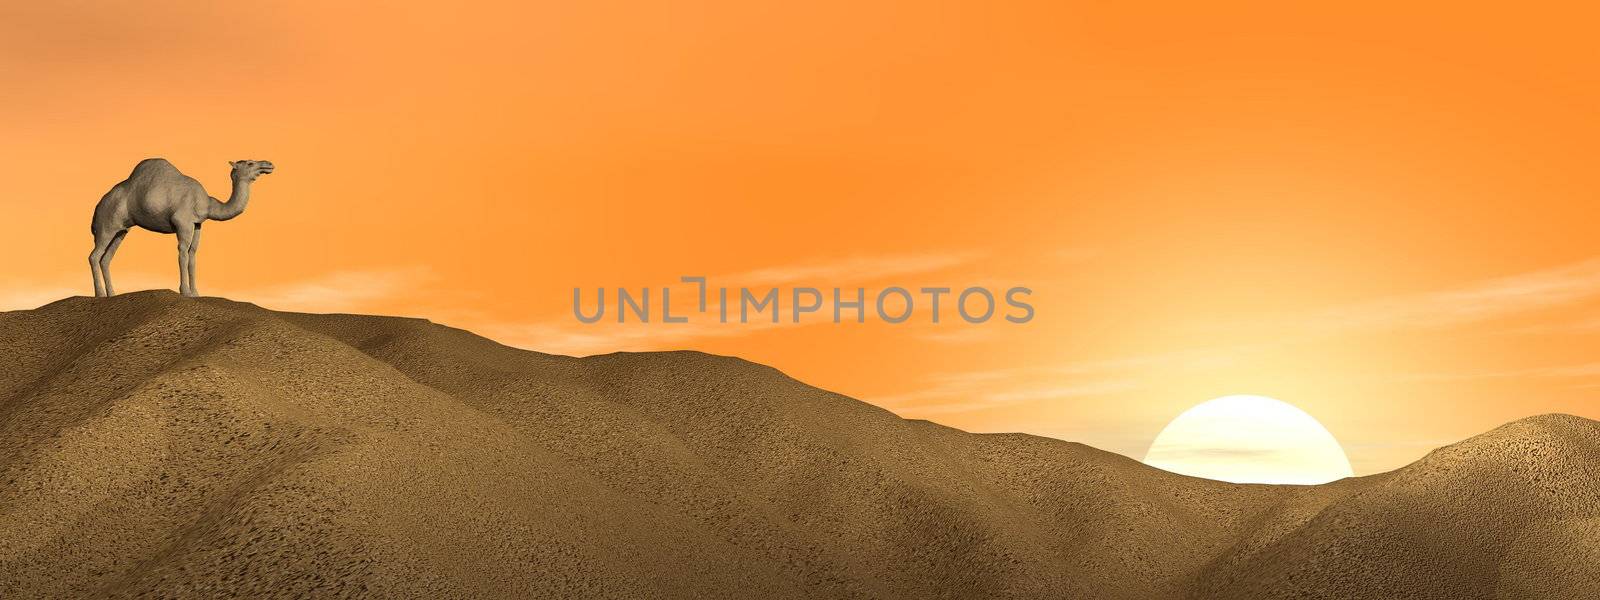 Camel in the desert by Elenaphotos21